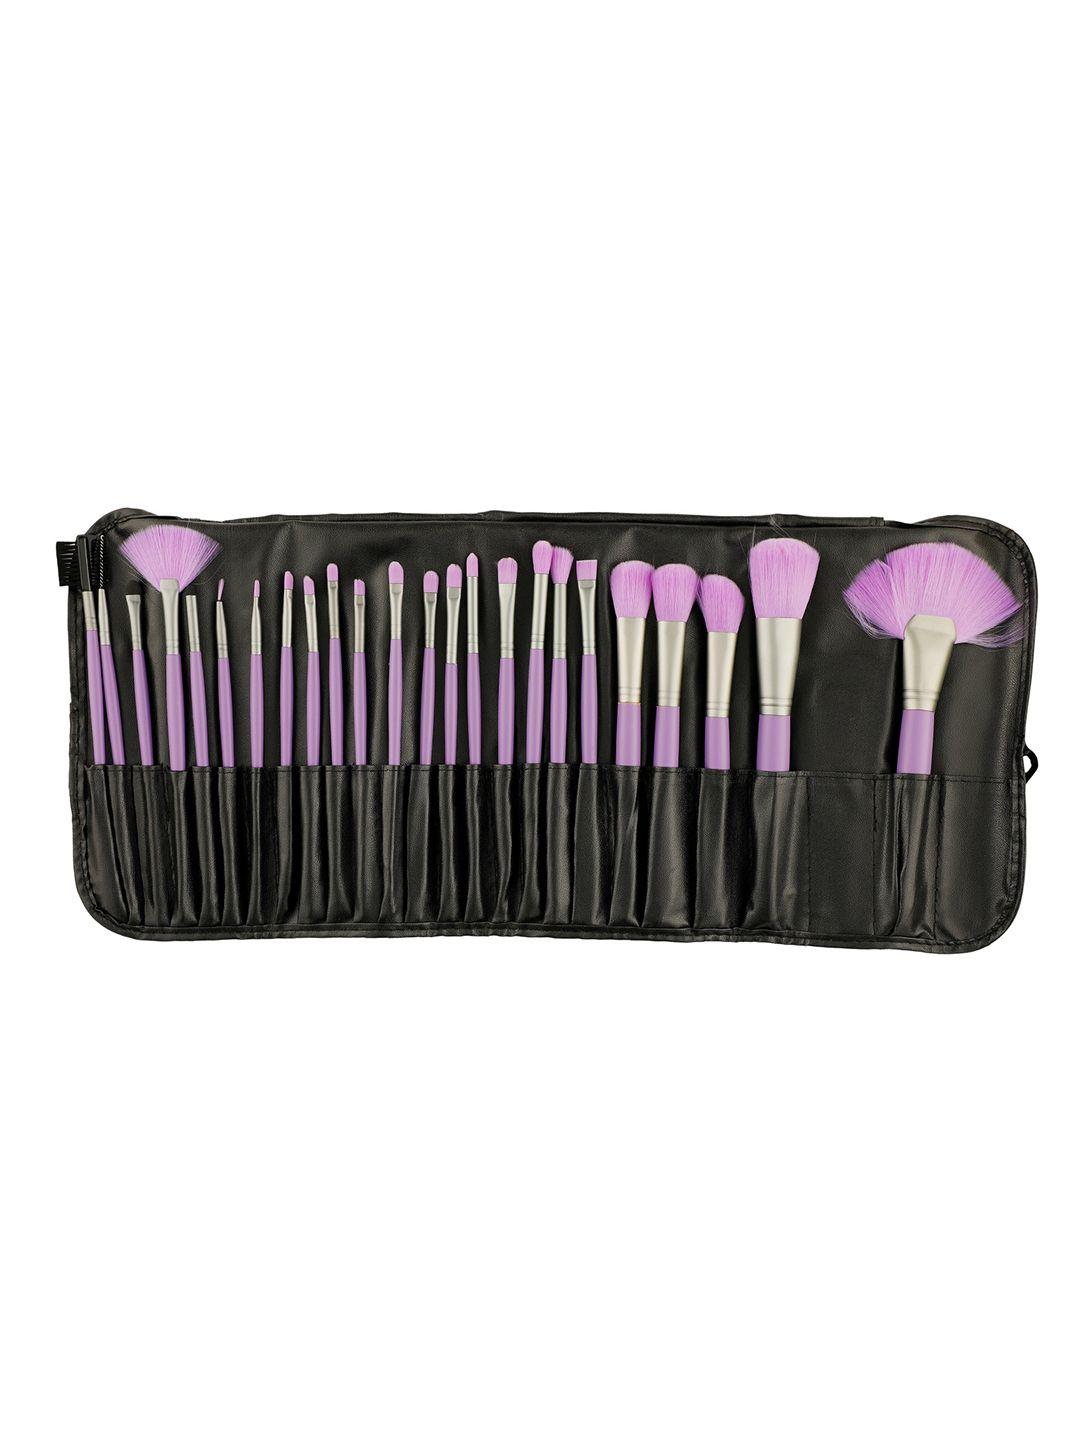 beaute secrets 24pcs premium cosmetic makeup brush set